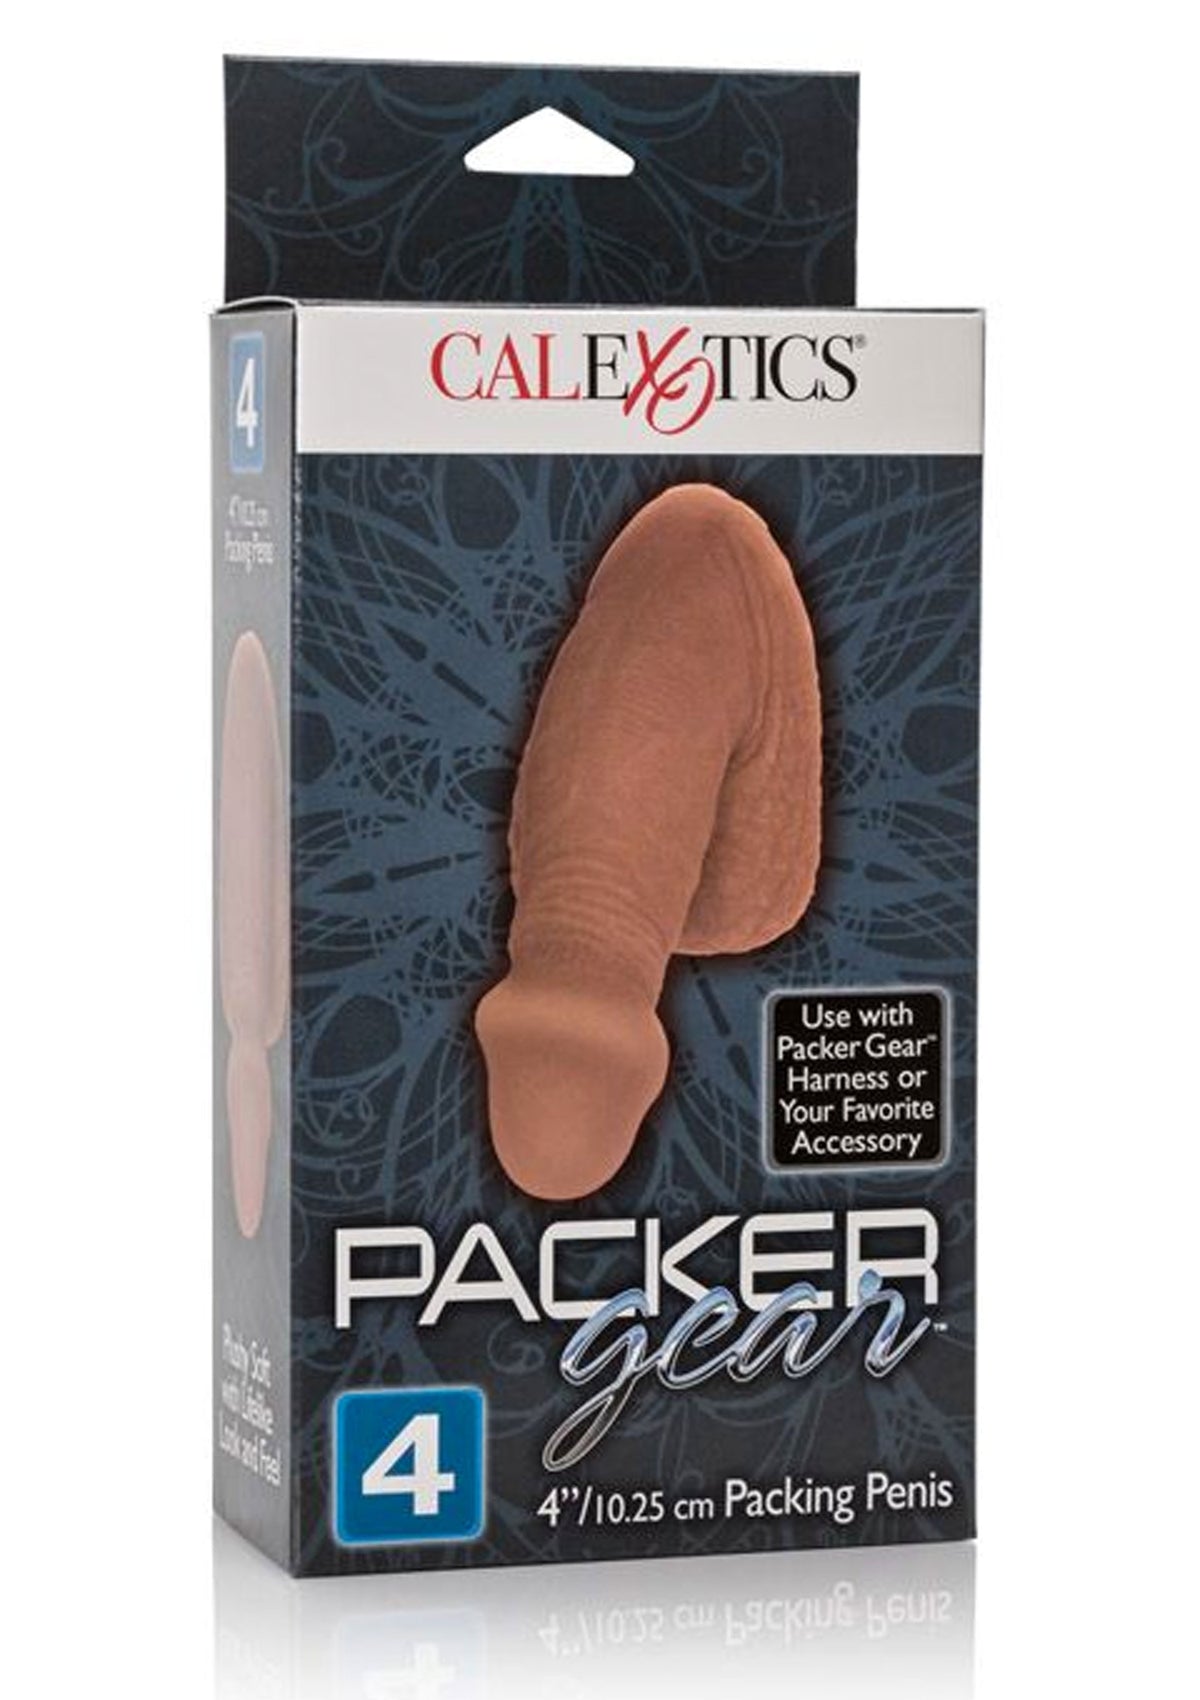 Packing Penis 4 in. / 10.3 cm